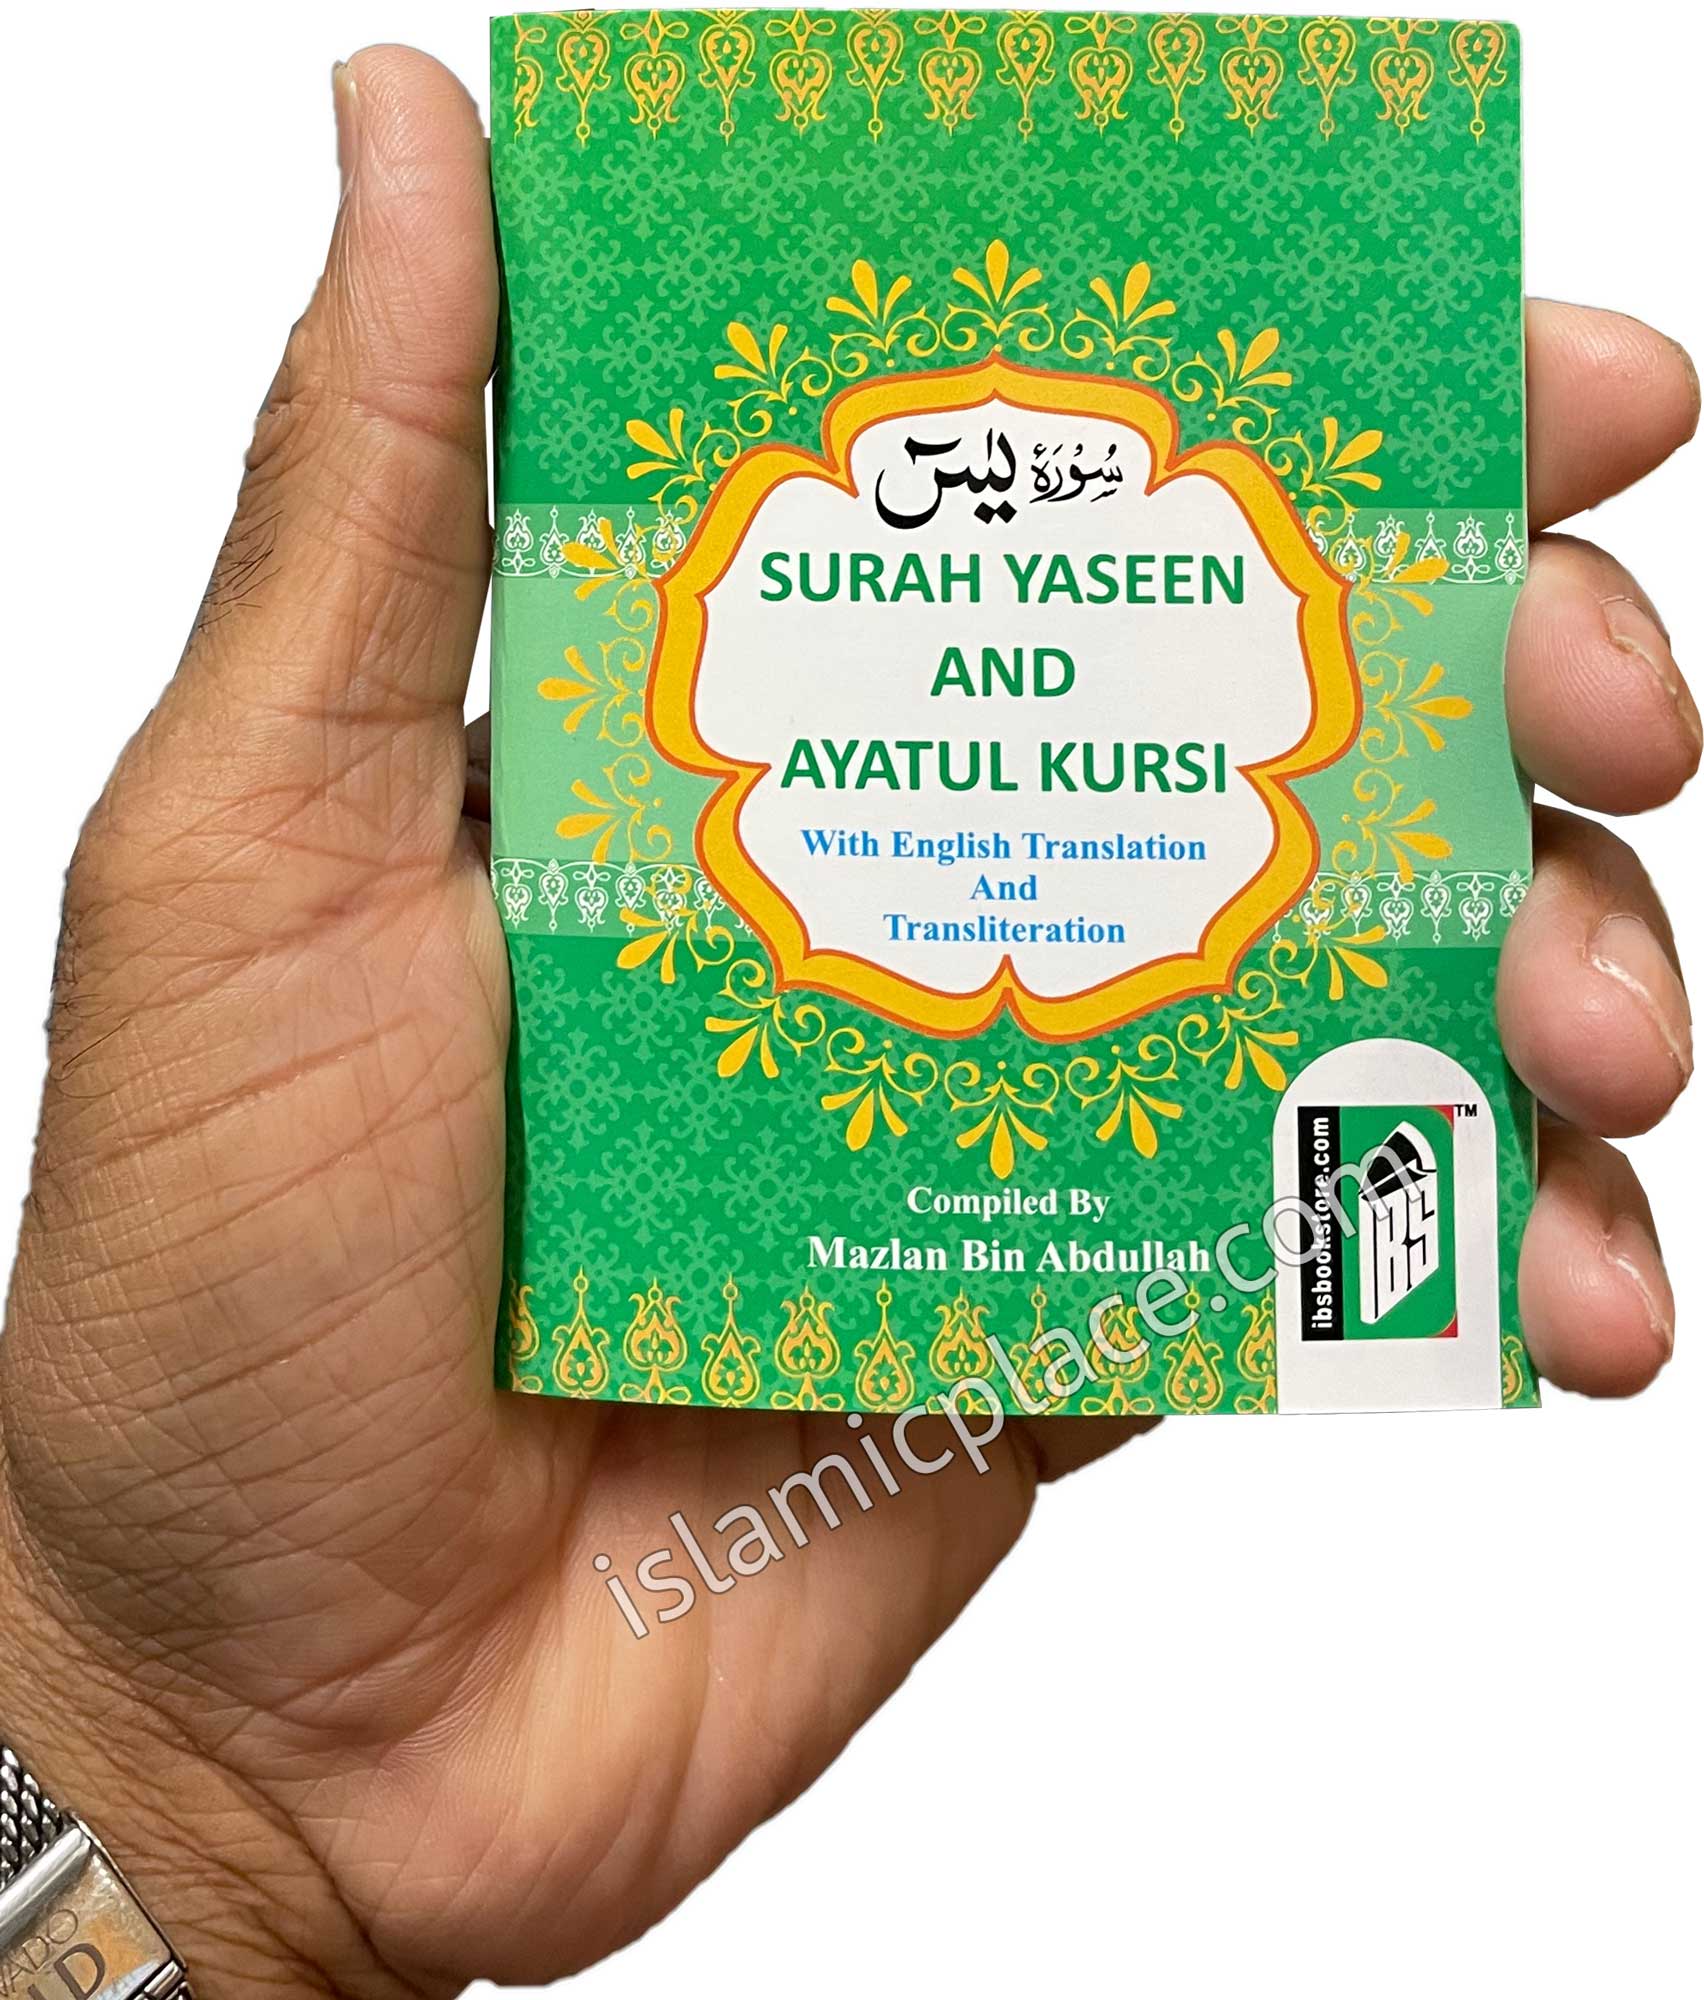 Surah Yaseen & Ayatul Kursi (Arabic, English and Transliteration) large print in pocket size